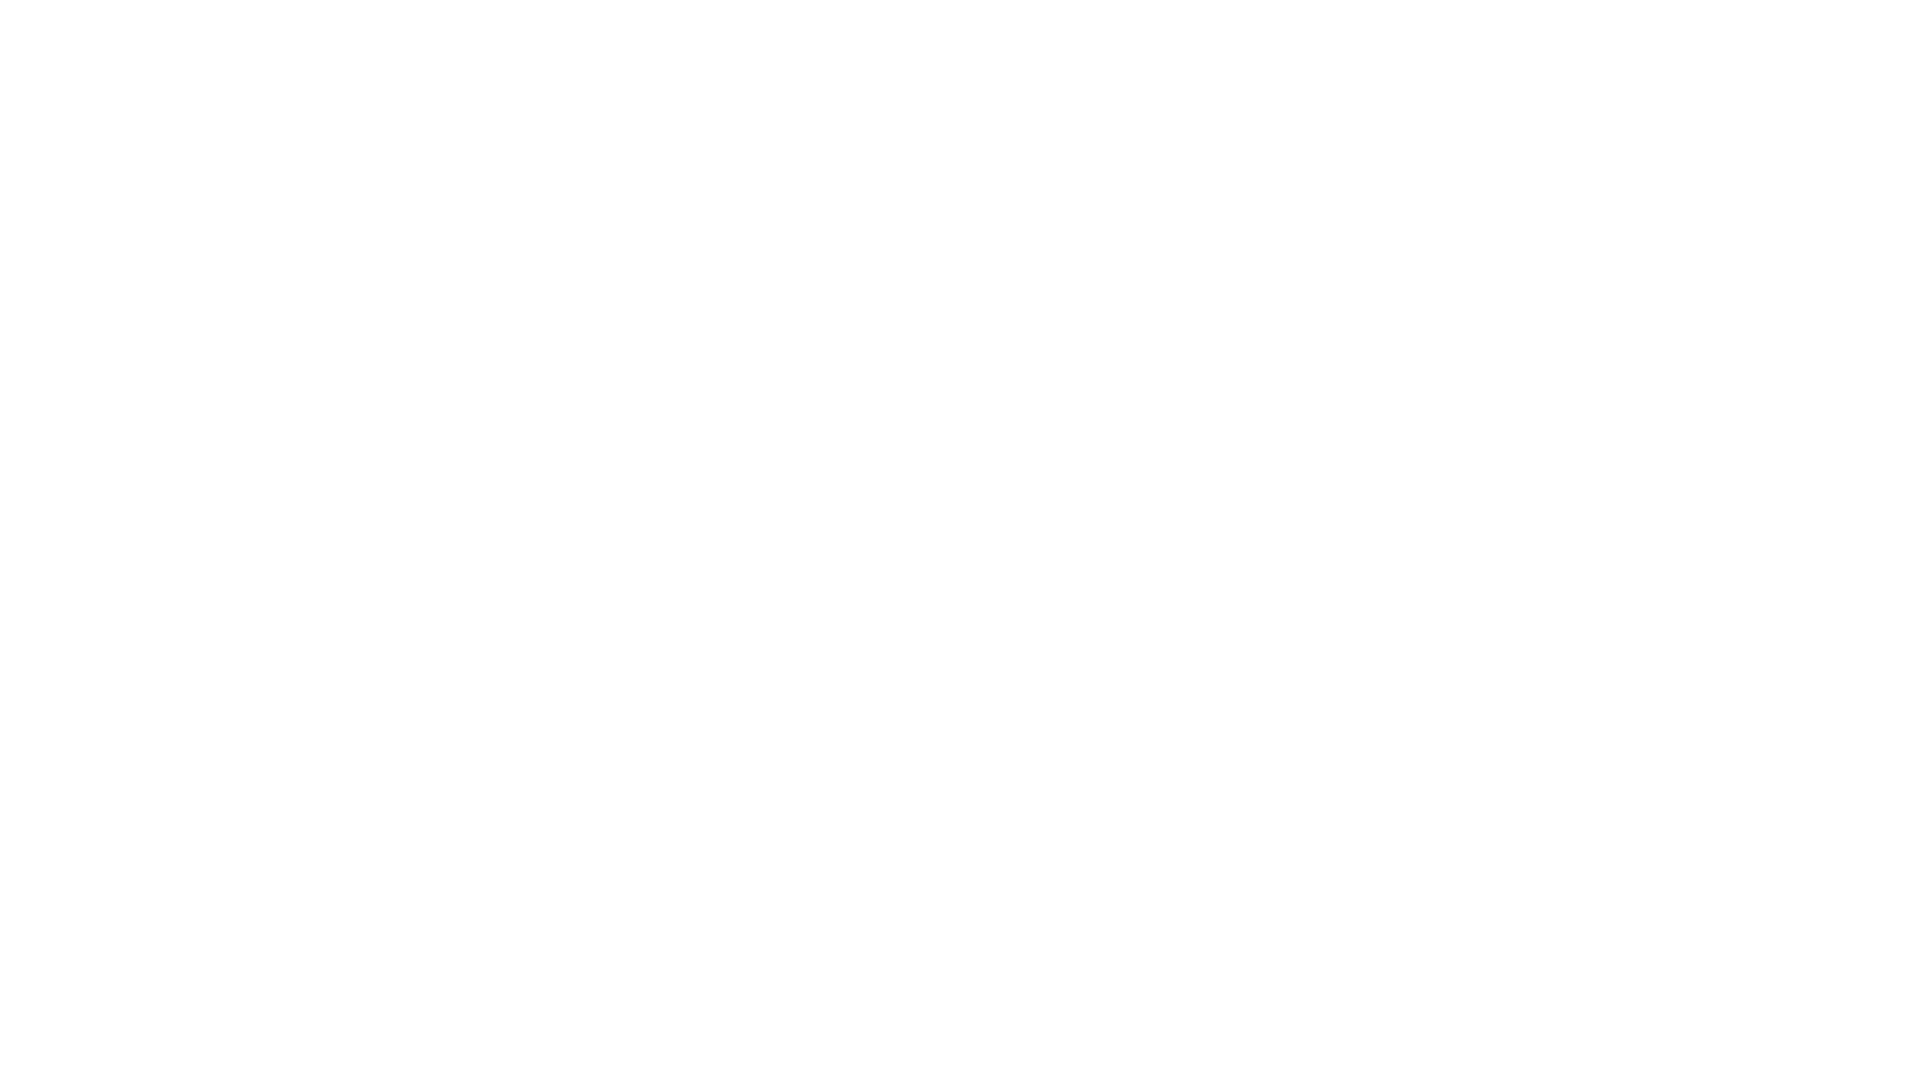 Nordic Fintech Magazine